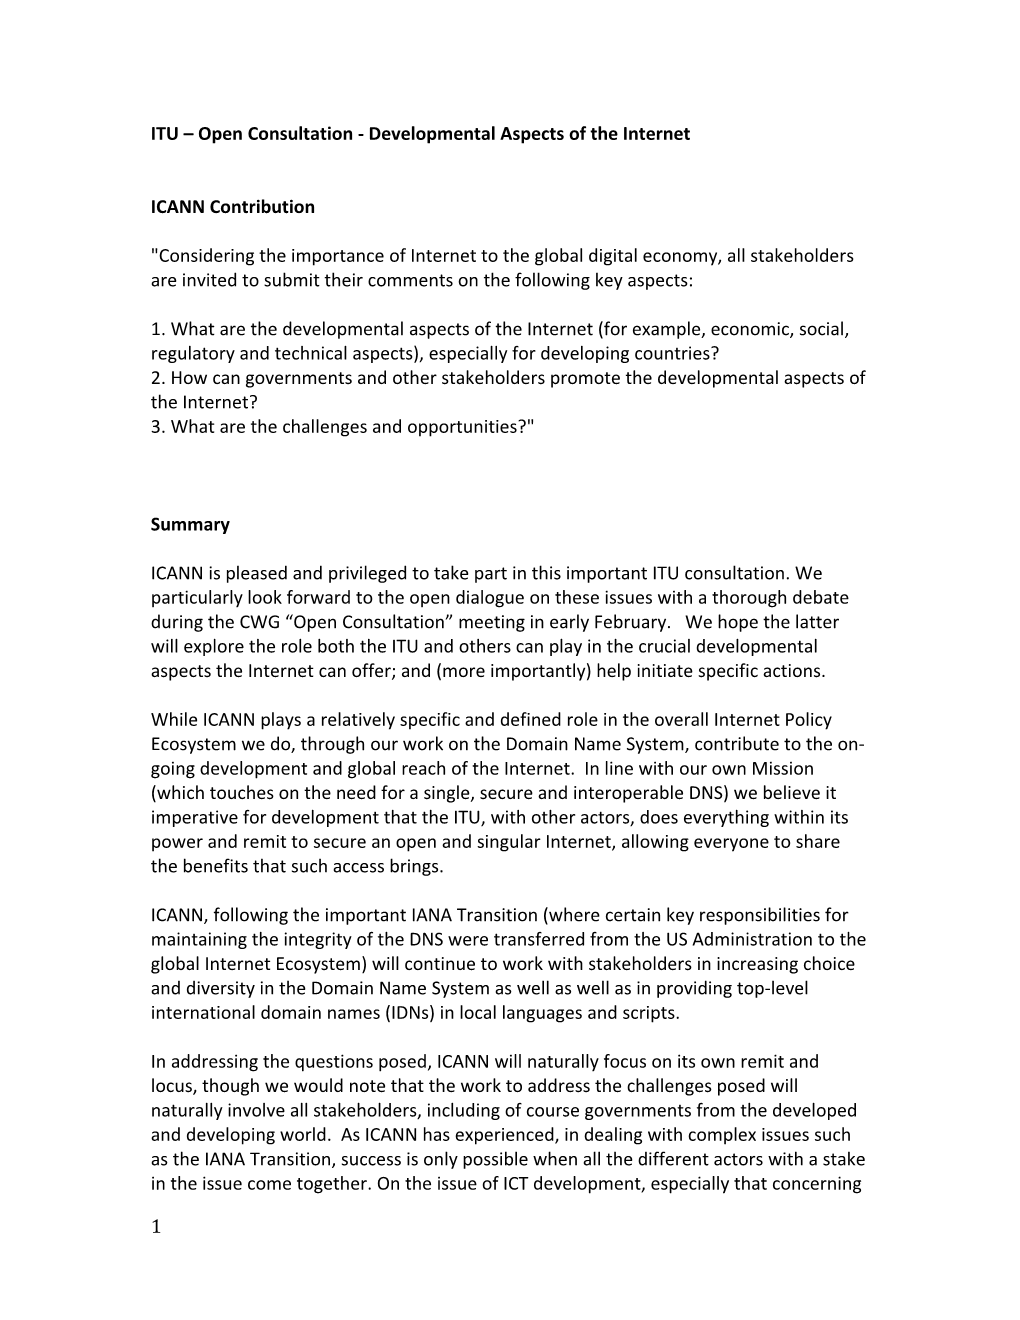 ITU Open Consultation - Developmental Aspects of the Internet